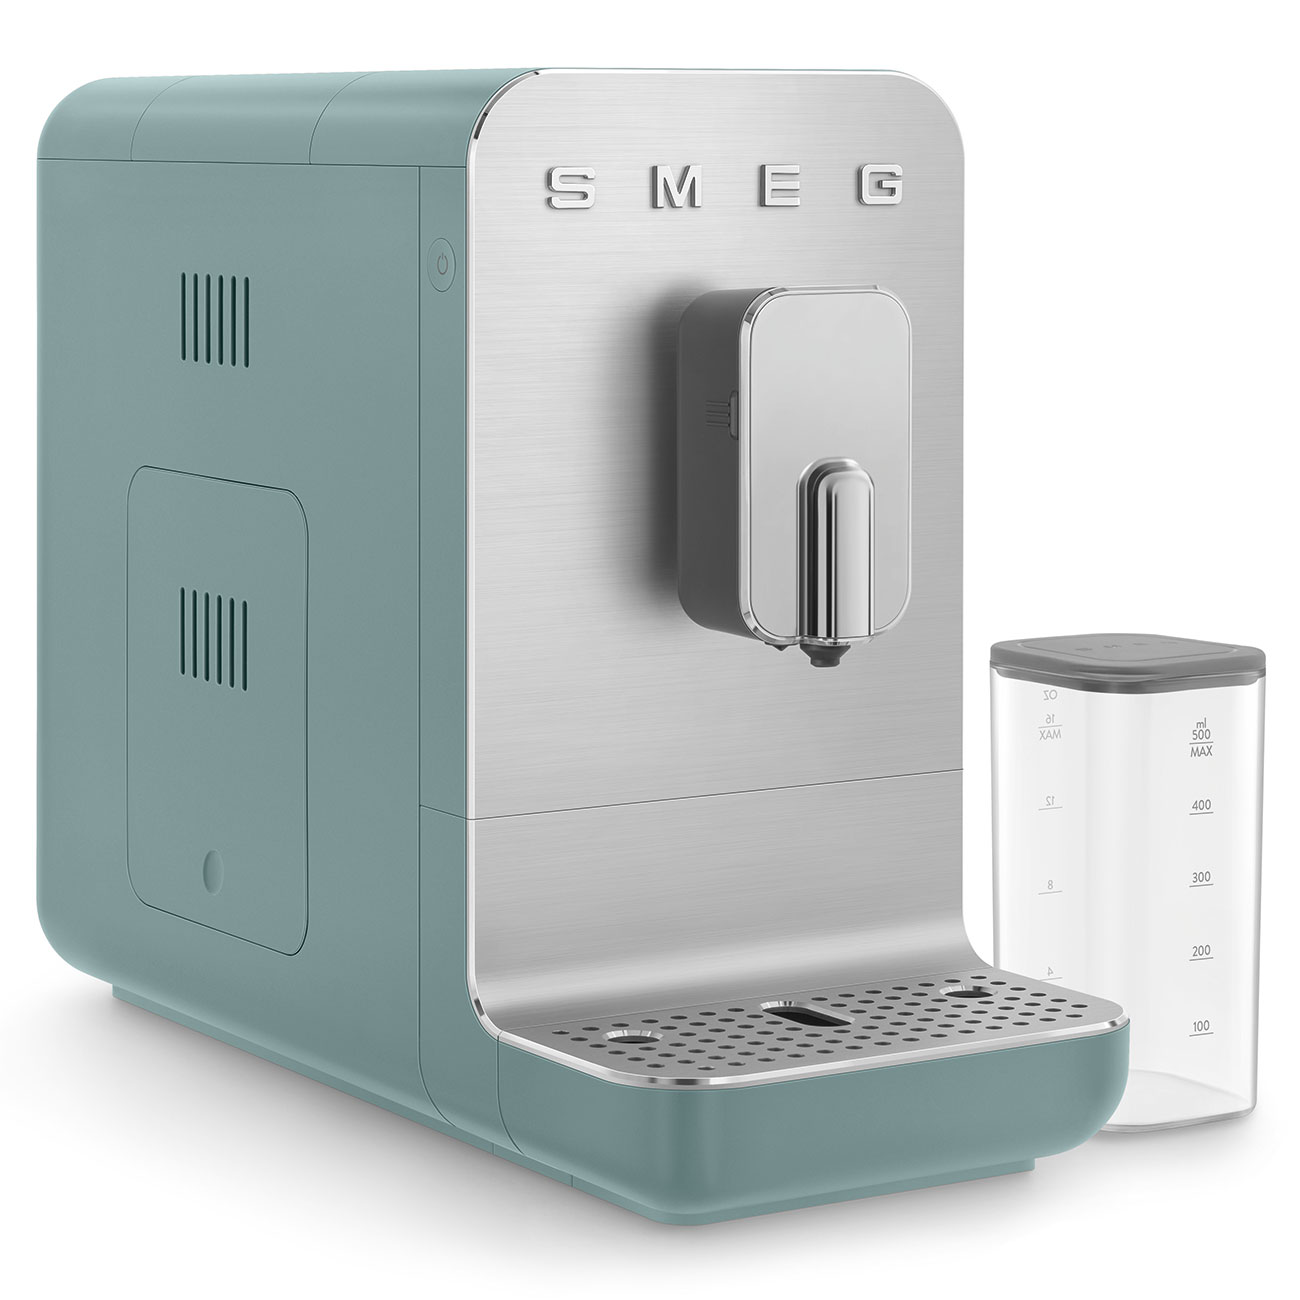 SMEG Emerald Green Kaffeevollautomat mit Milchfunktion_3